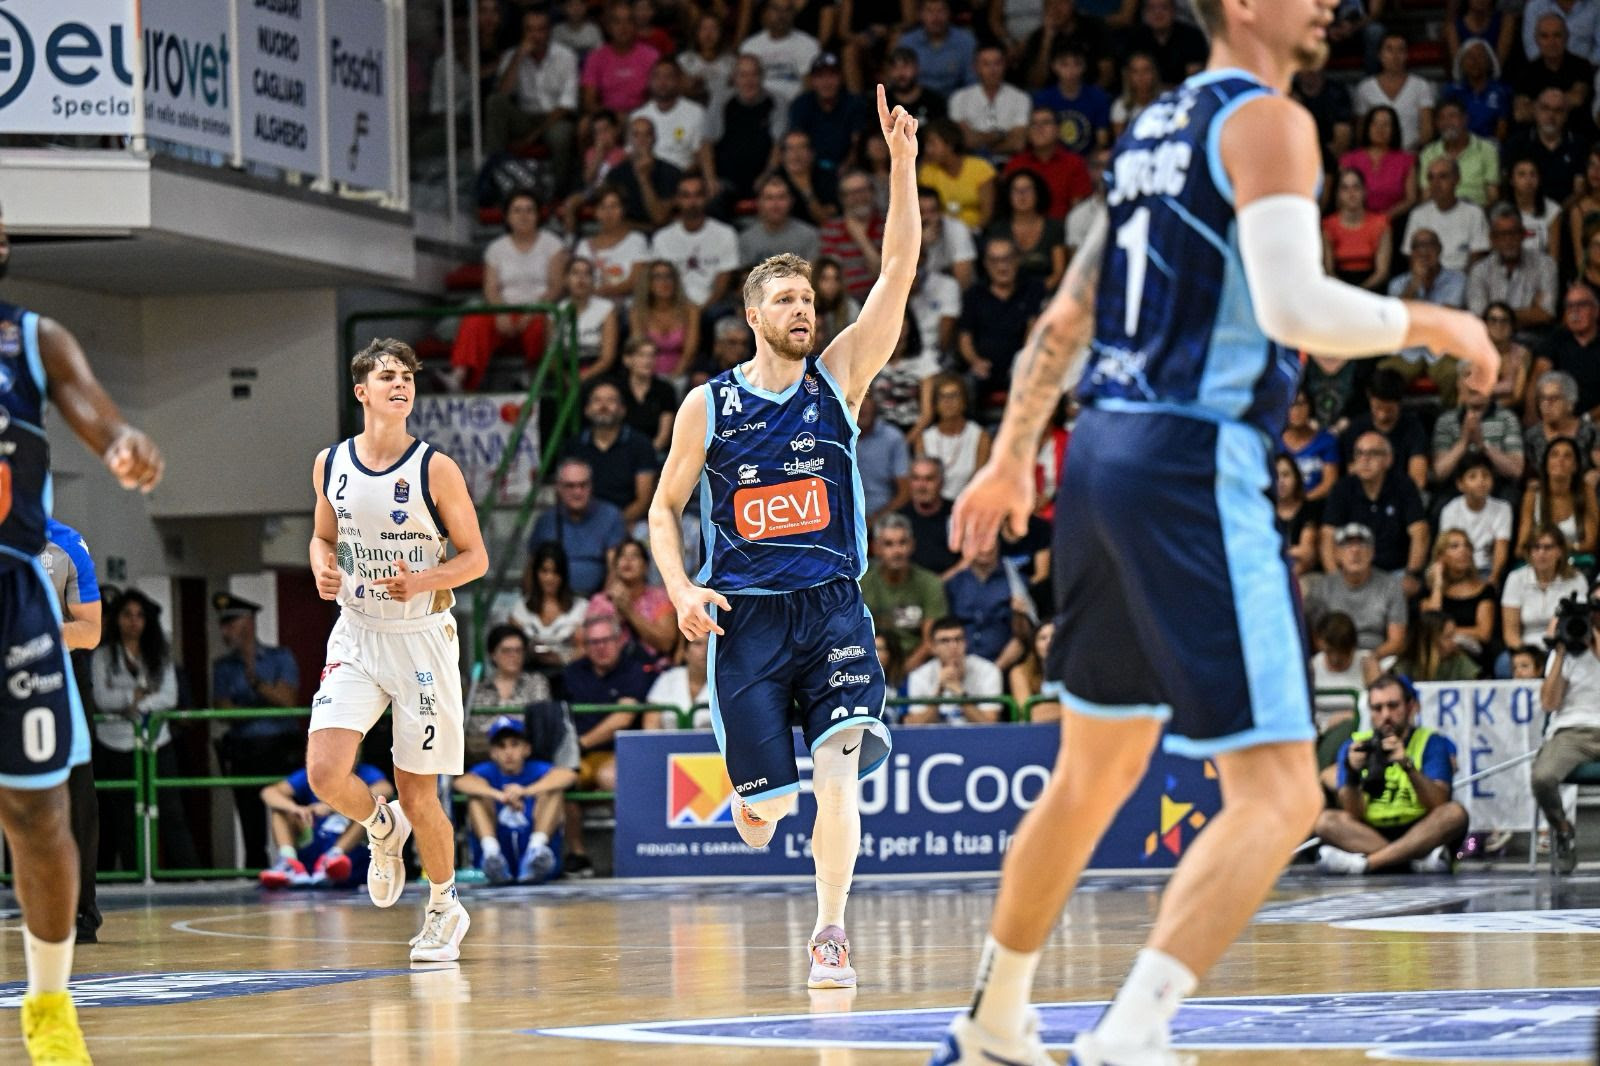 Gevi Napoli Basket, esordio vincente in campionato a Sassari